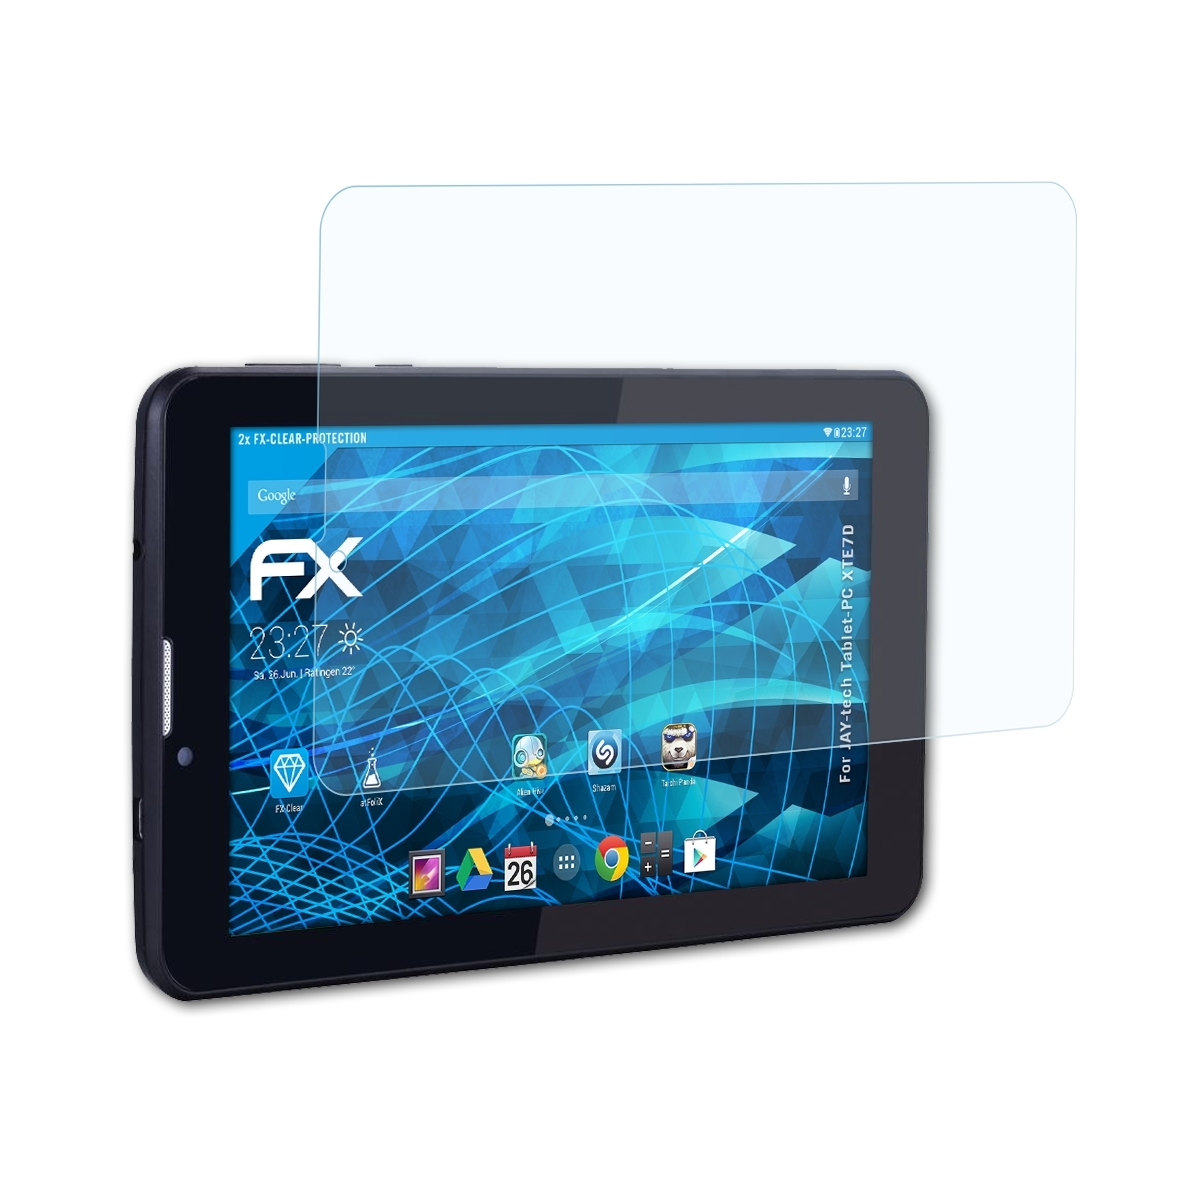 ATFOLIX 2x FX-Clear Displayschutz(für JAY-tech Tablet-PC XTE7D)